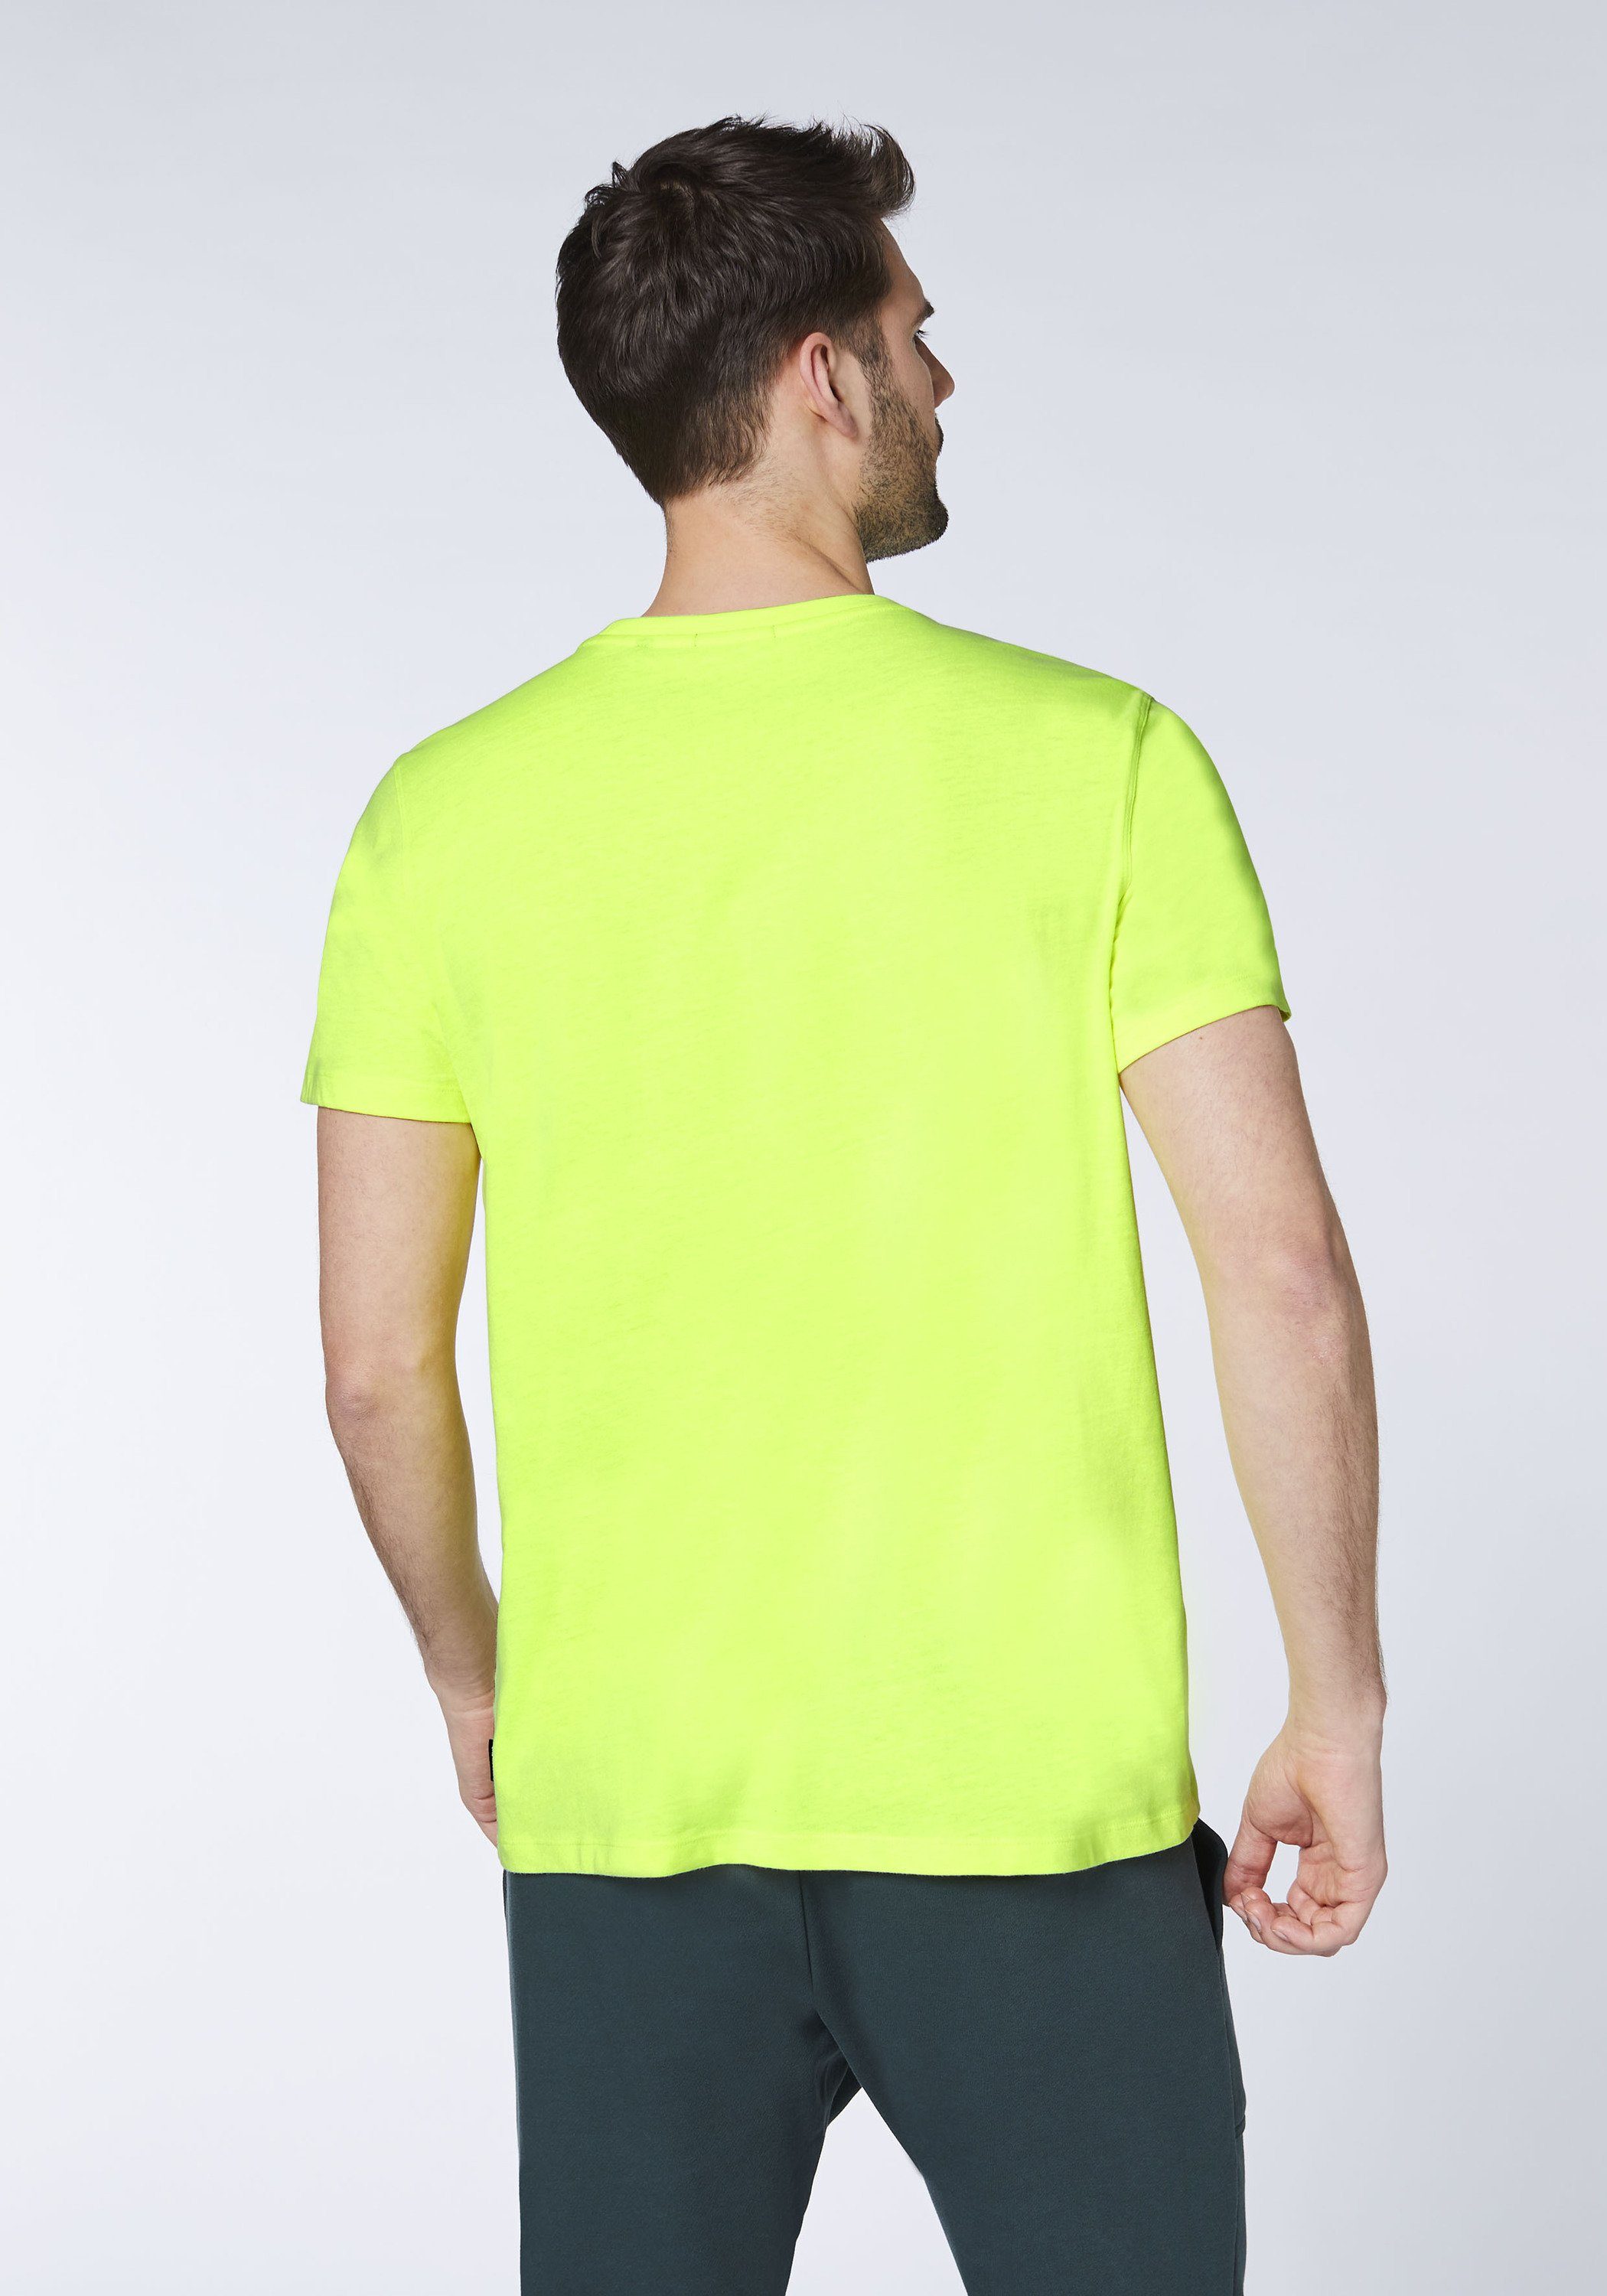 Chiemsee Print-Shirt T-Shirt Yellow 1 mit Safety Jumper-Motiv